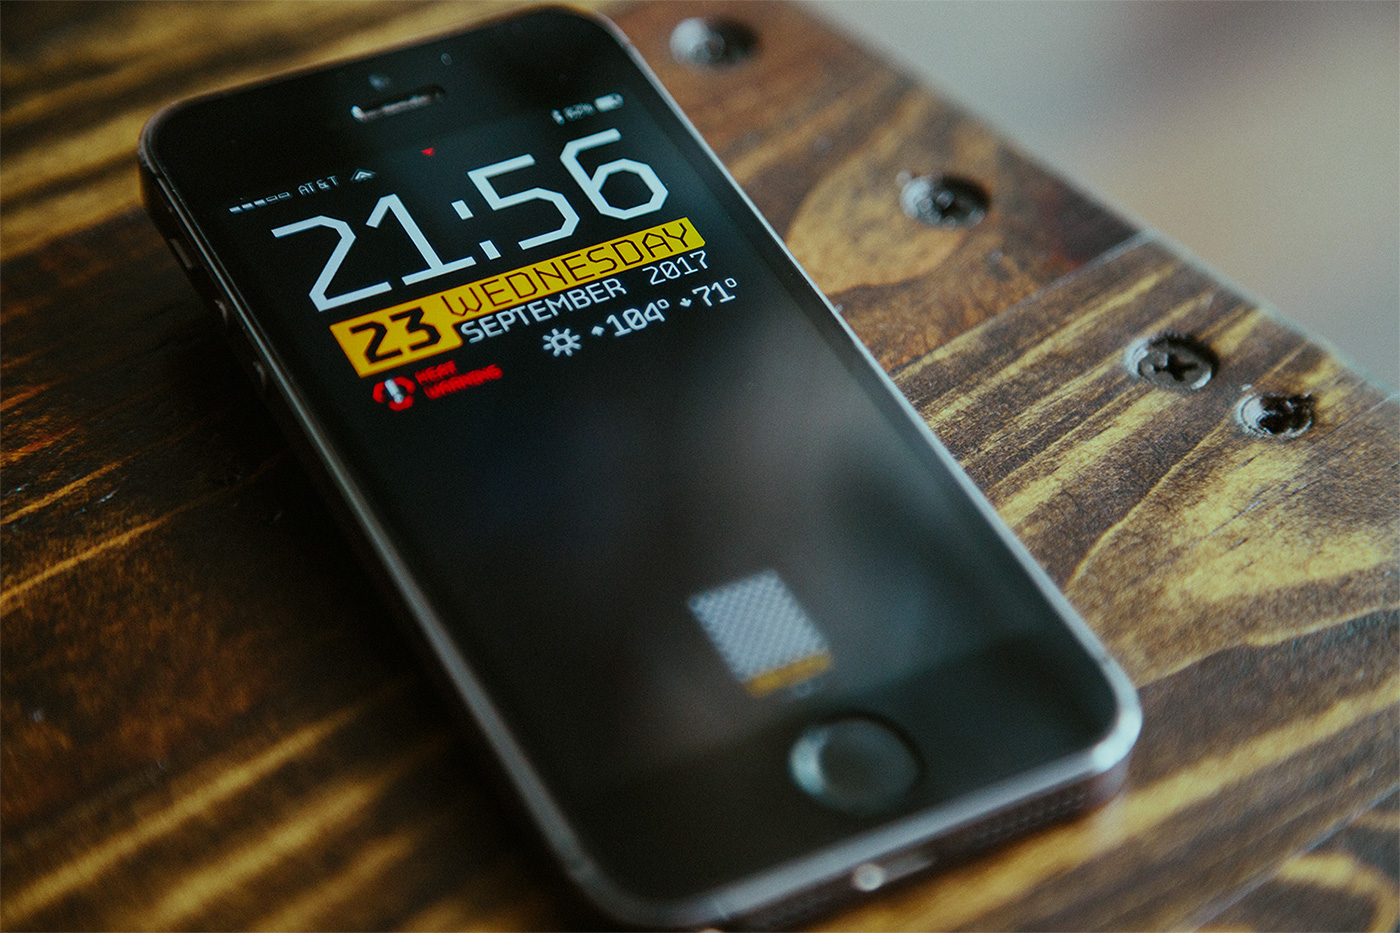 oscar mar smart phone iphone UI ux GUI motion graphics  sci-fi future